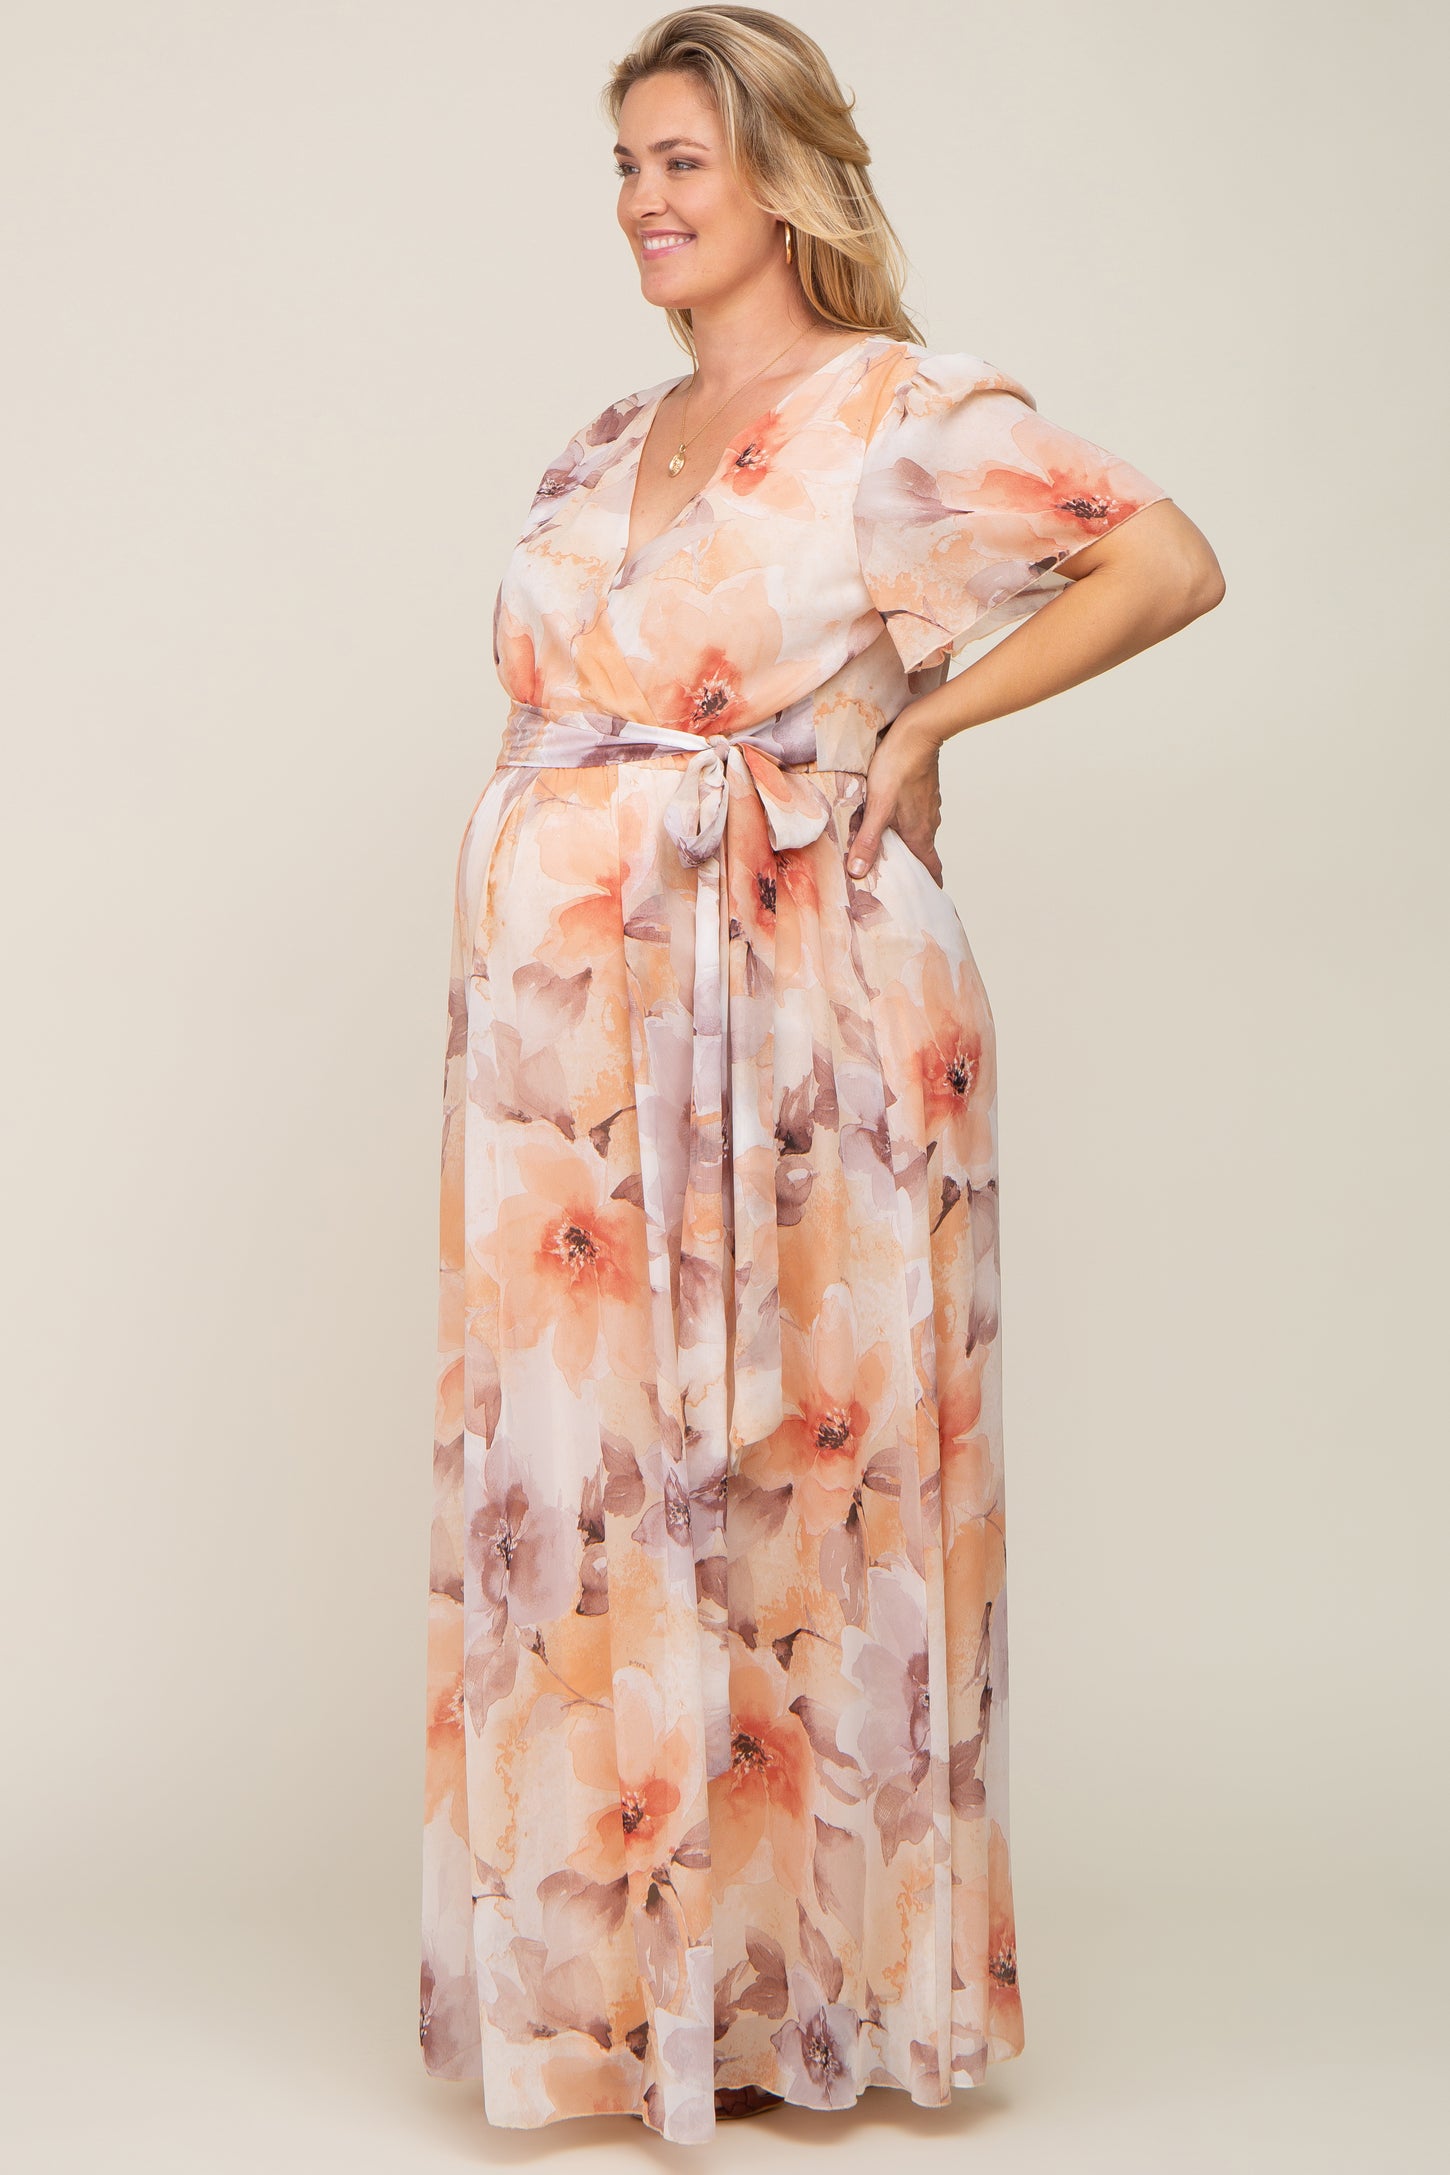 Peach Floral Chiffon Wrap Front Short Sleeve Maternity Plus Maxi Dress